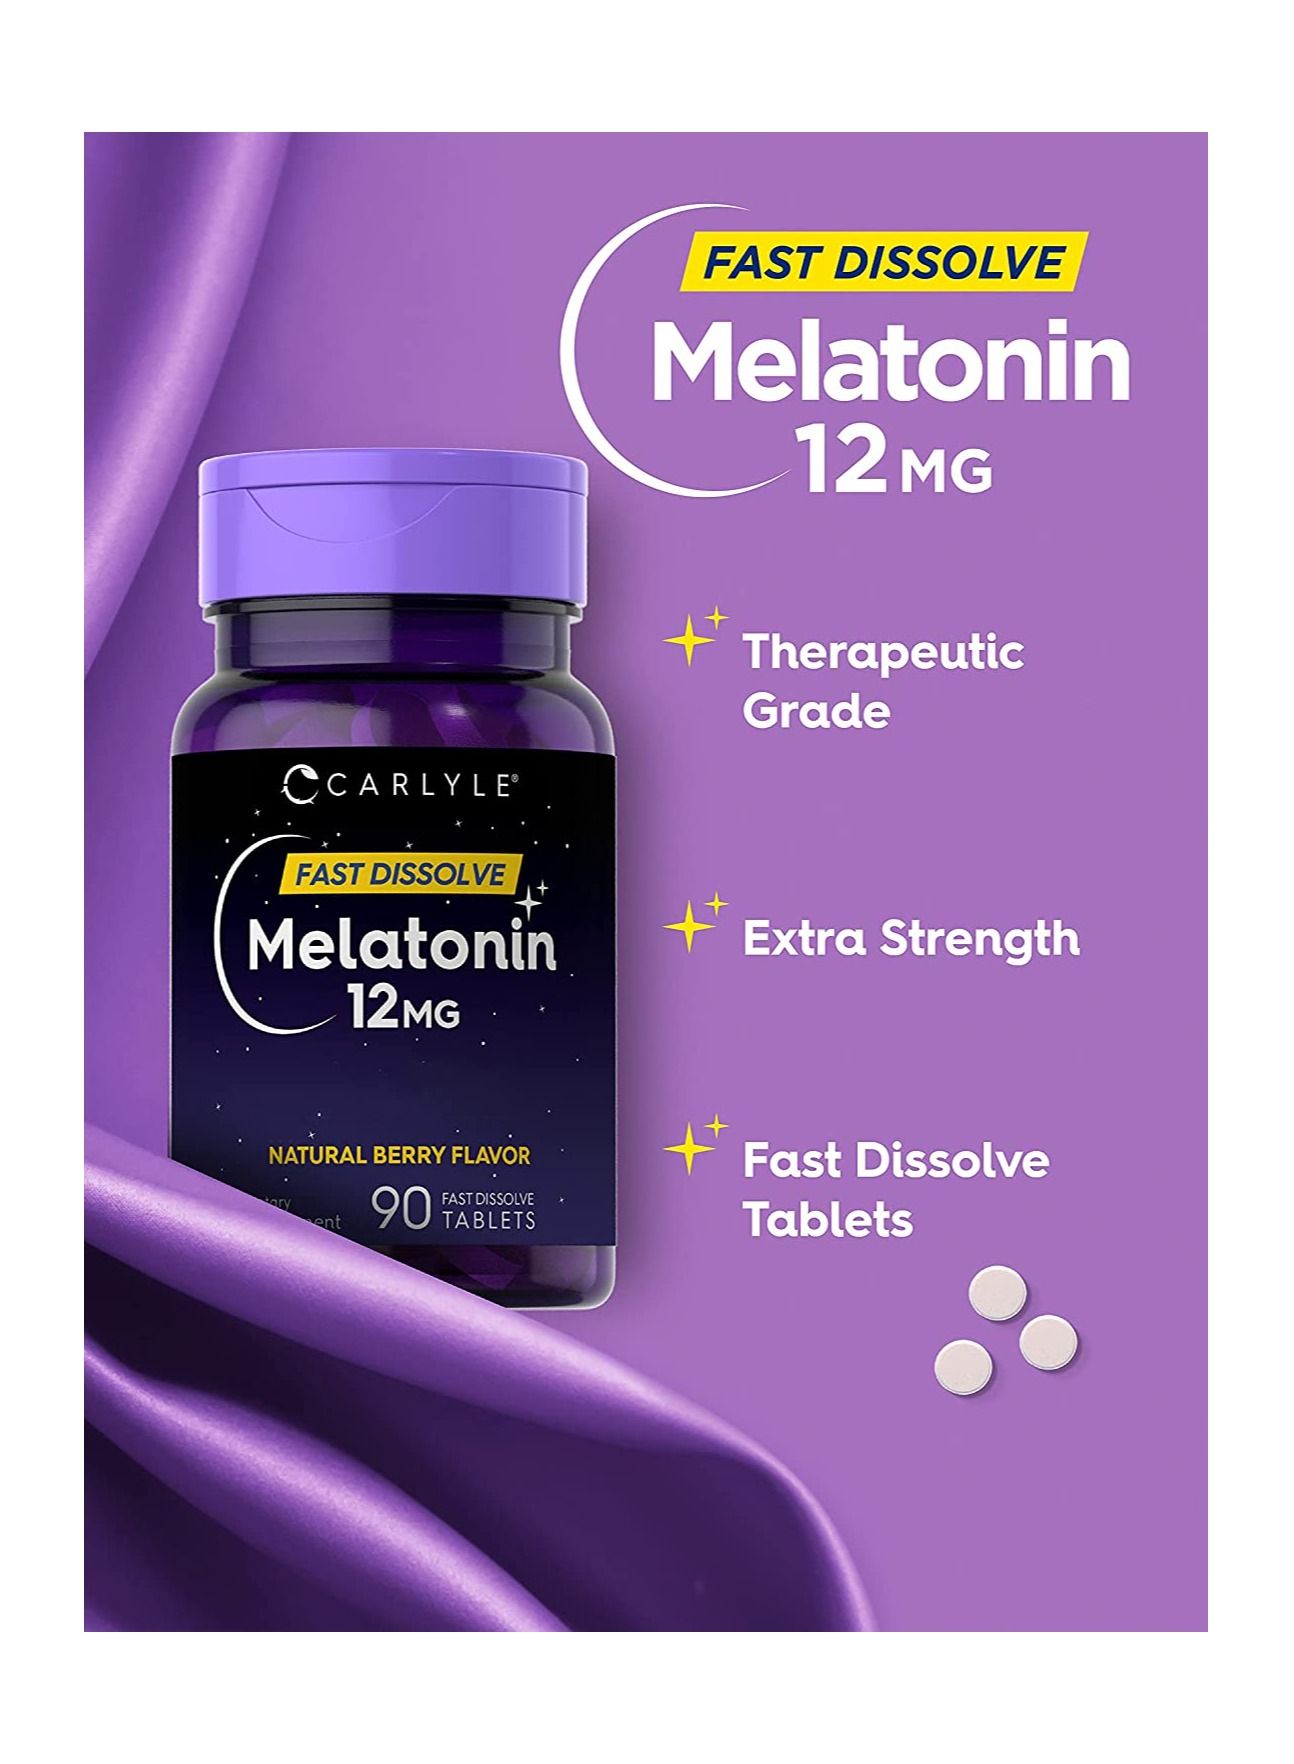 Carlyle Melatonin 12 mg Fast Dissolve 90 Tablets, Natural Berry Flavor Vegetarian, Non-GMO, Gluten Free 